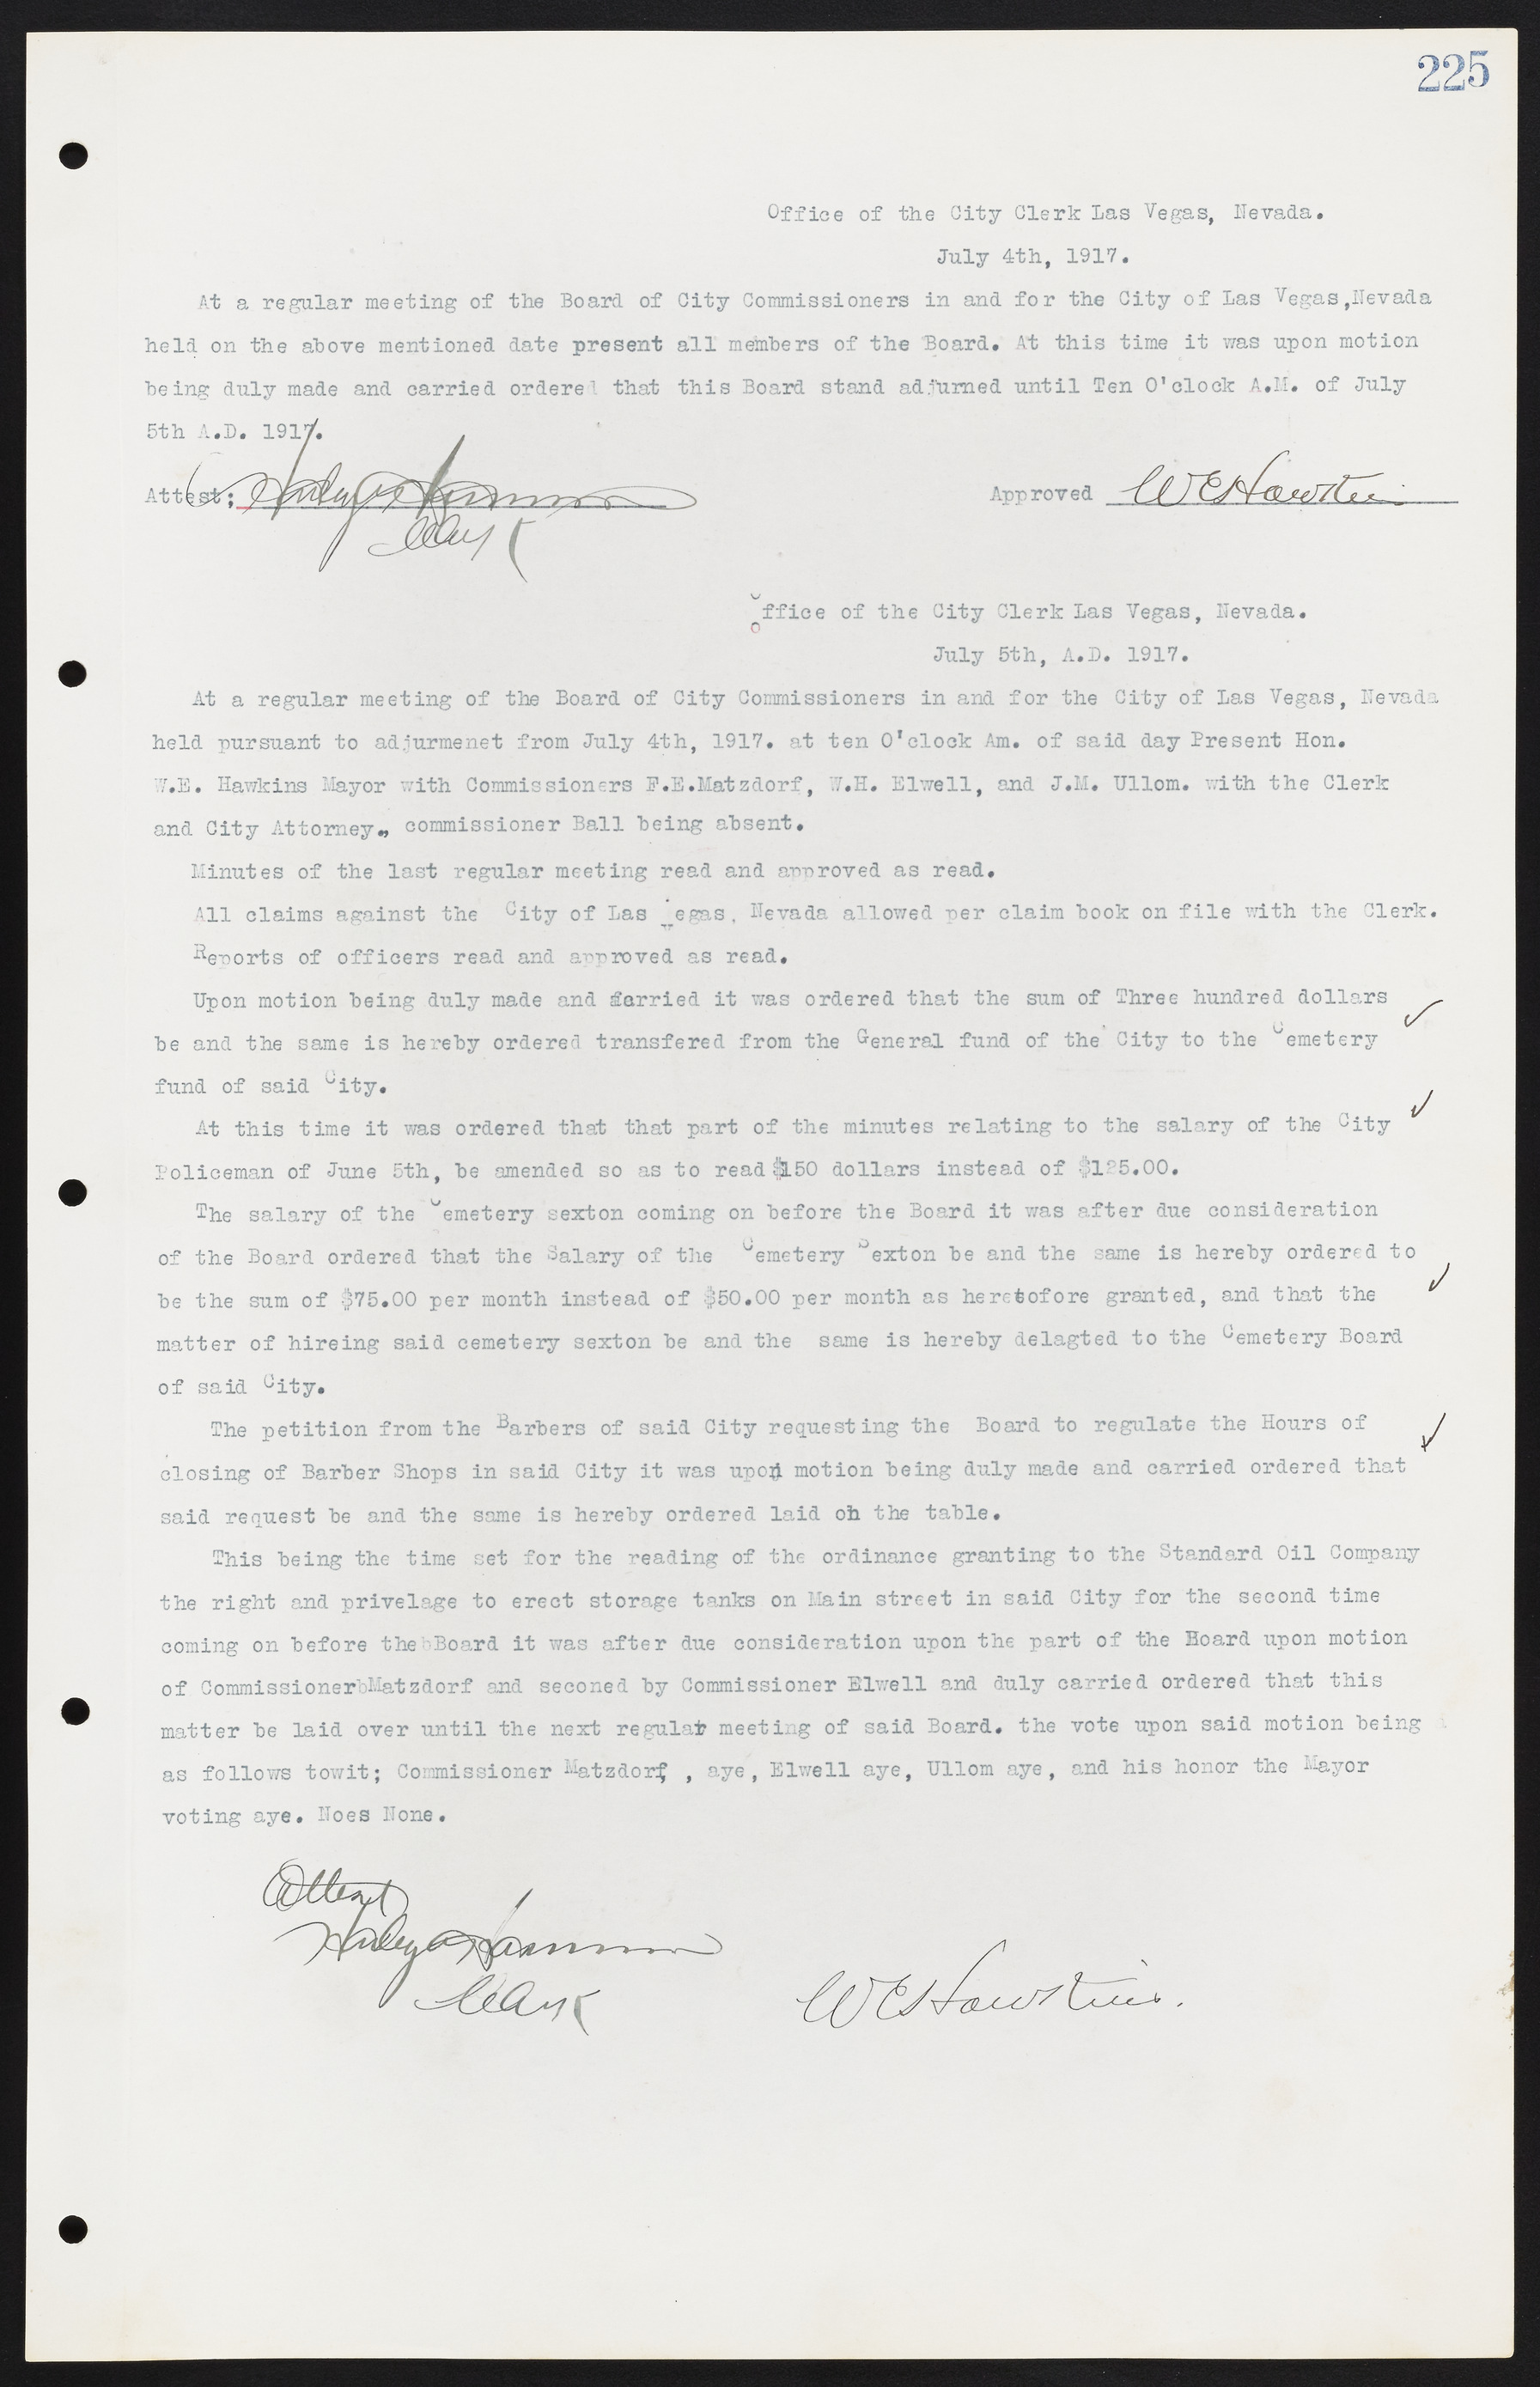 Las Vegas City Commission Minutes, June 22, 1911 to February 7, 1922, lvc000001-241